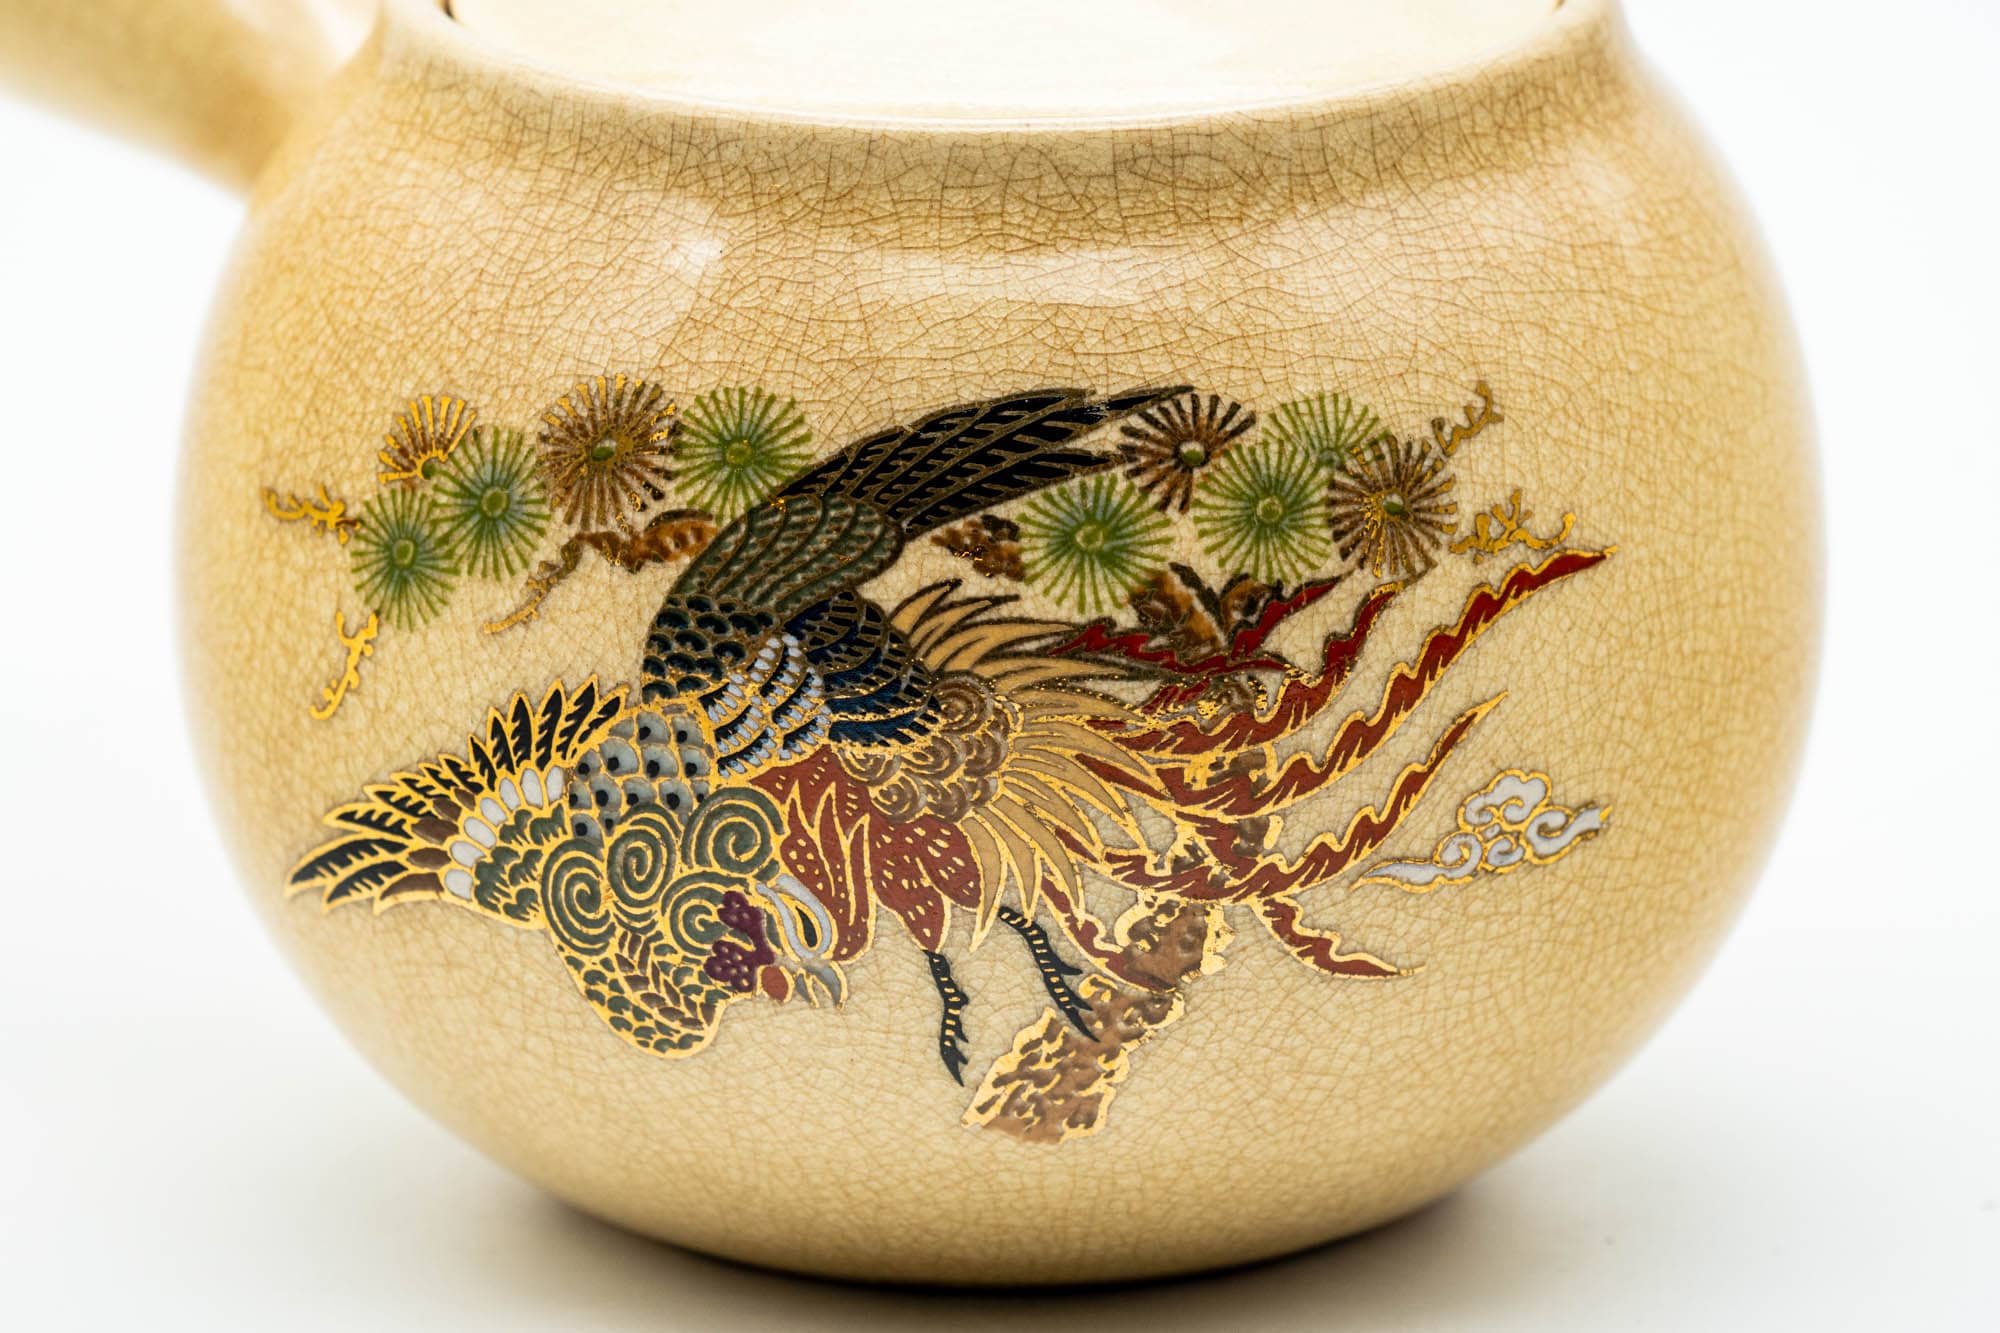 Japanese Kyusu - Beige Weathered Kutani-yaki Ceramic Teapot - 300ml